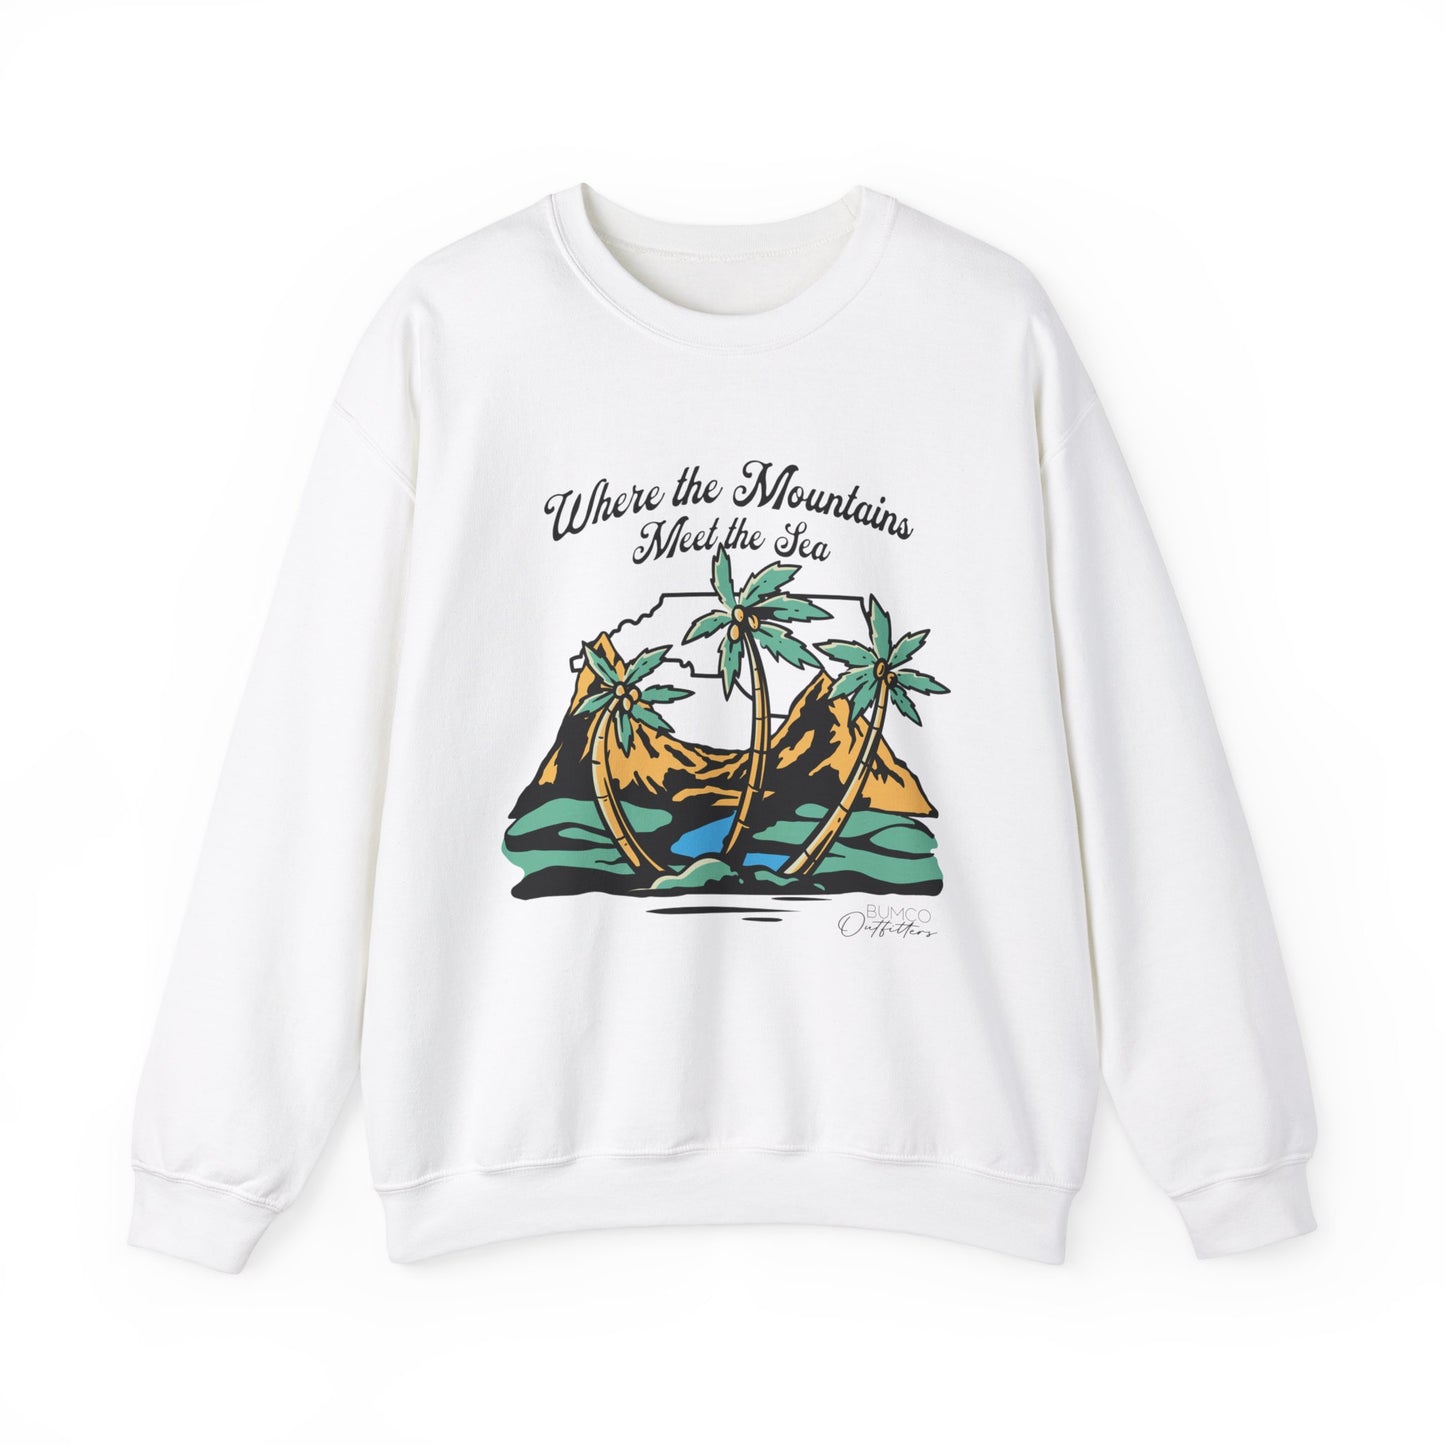 Where the Mountains Meet the Sea - Crewneck Sweatshirt